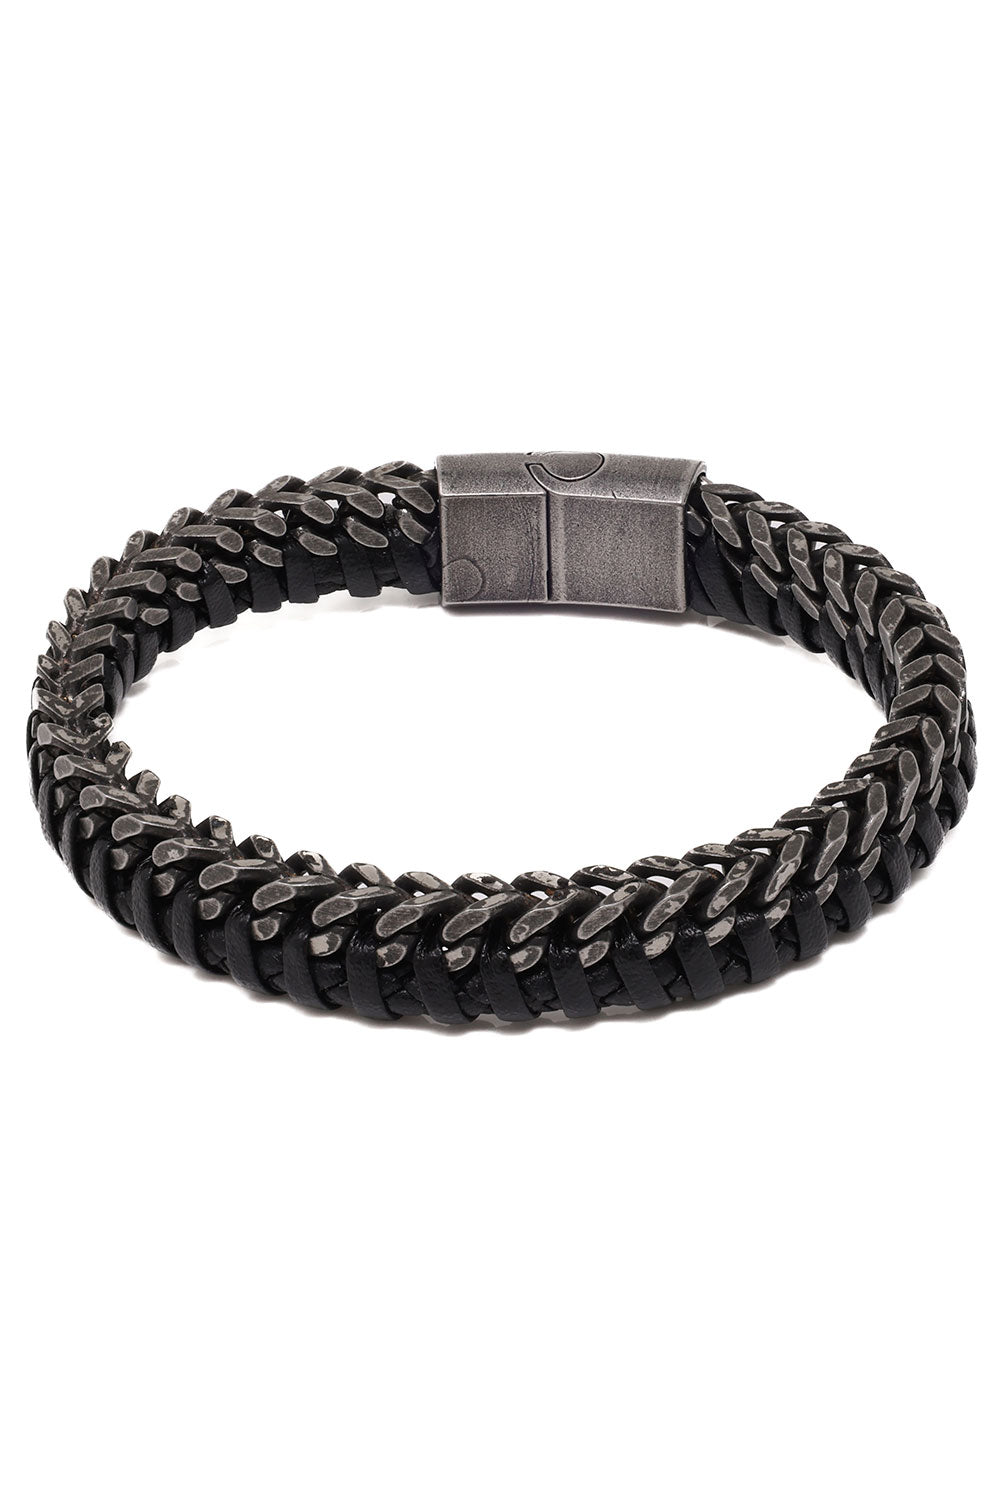 Barabas Unisex Braided Leather Metal Bangle Bracelets 4BMS01 Silver Black